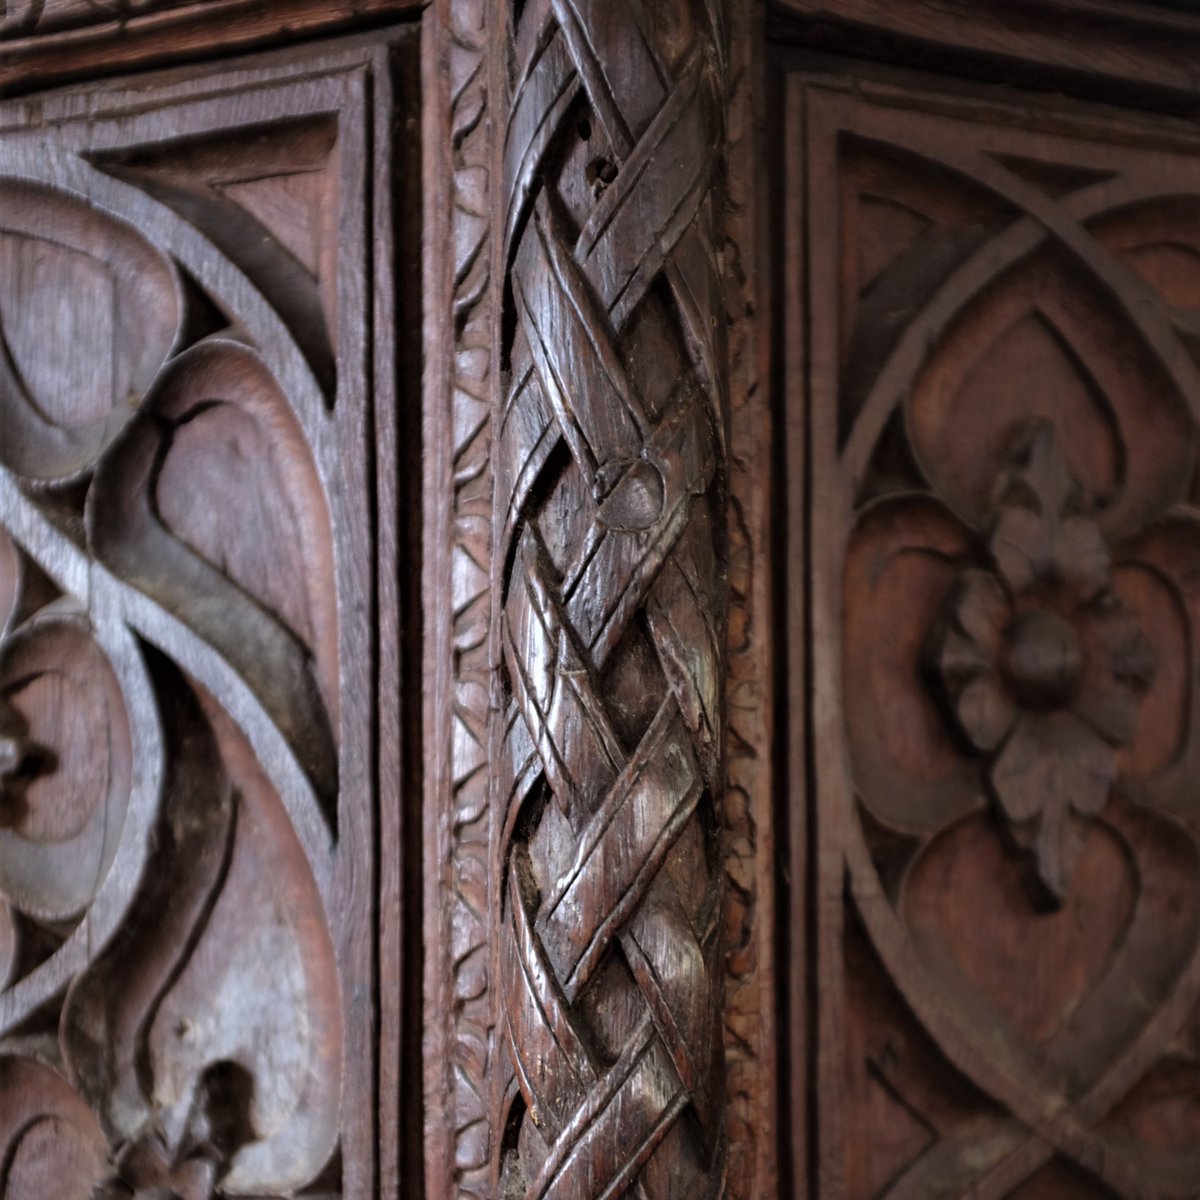 Modbury #Devon Pulpit made up of wainscot panels from former chancel screen. Beautiful work. 📸: my own #SundaySermons